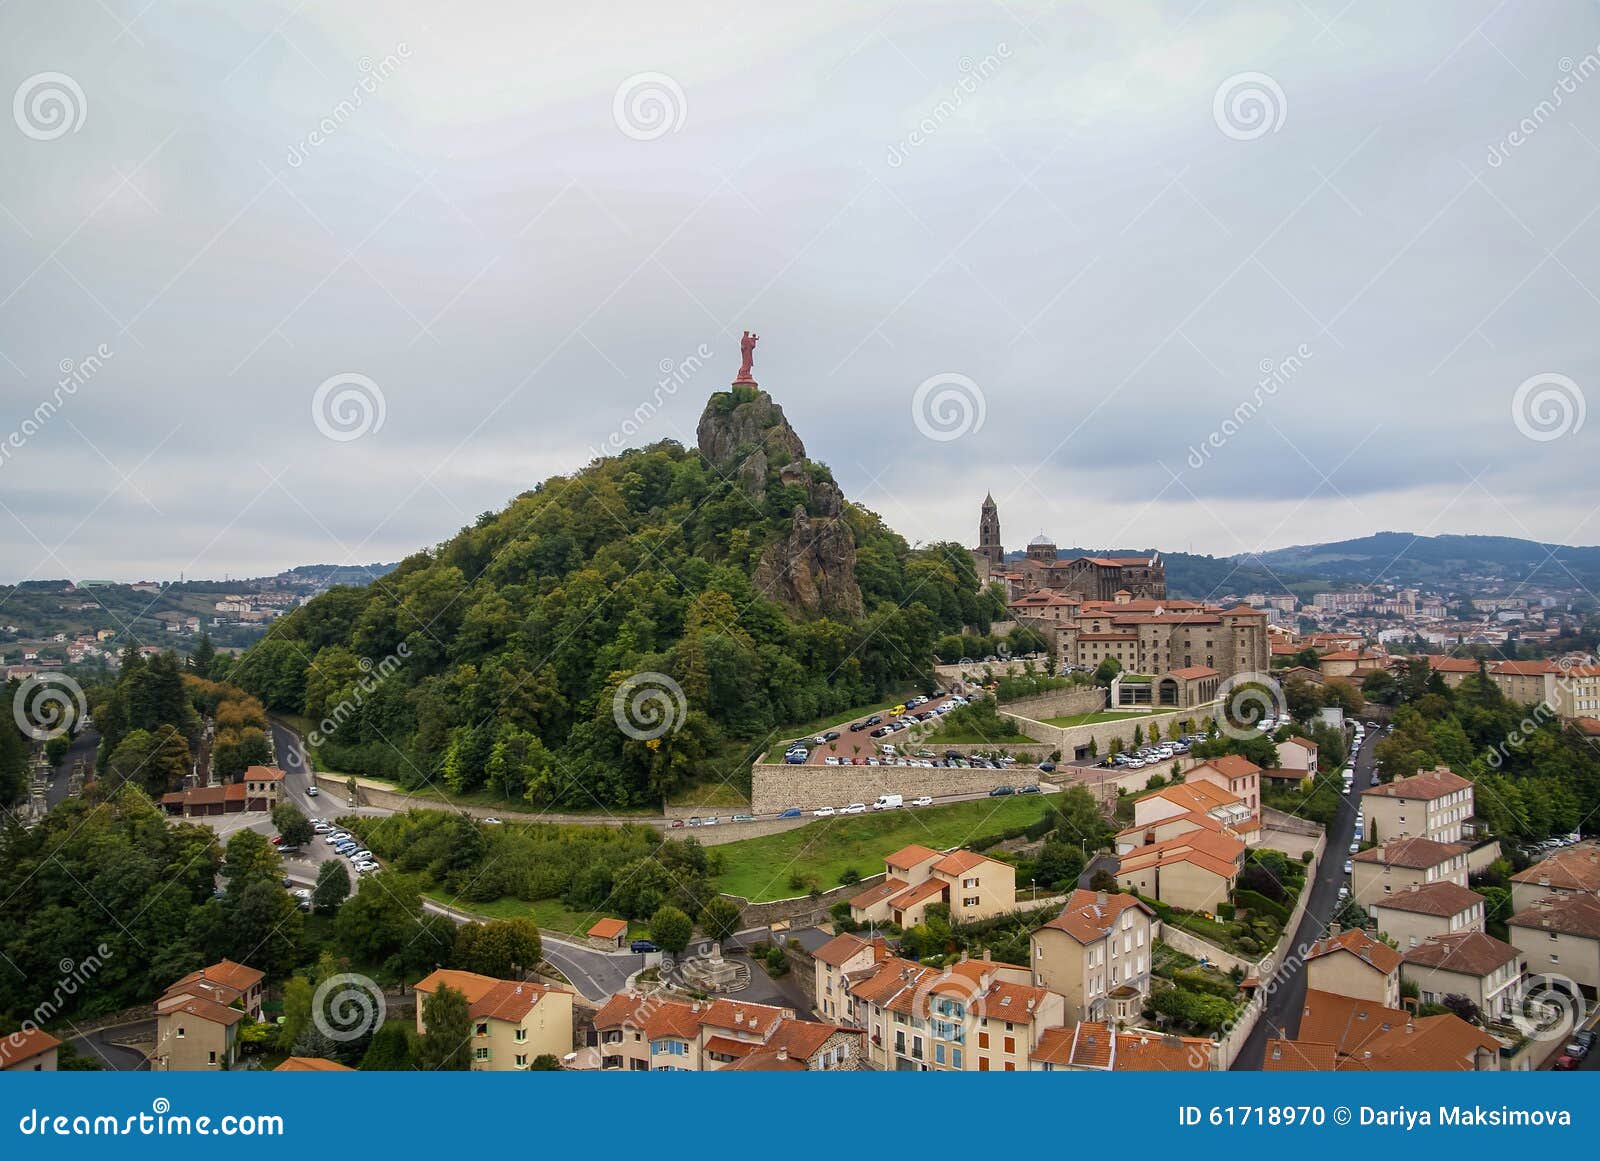 Le Puy, France stock photo. Image of faith, travel, union - 61718970